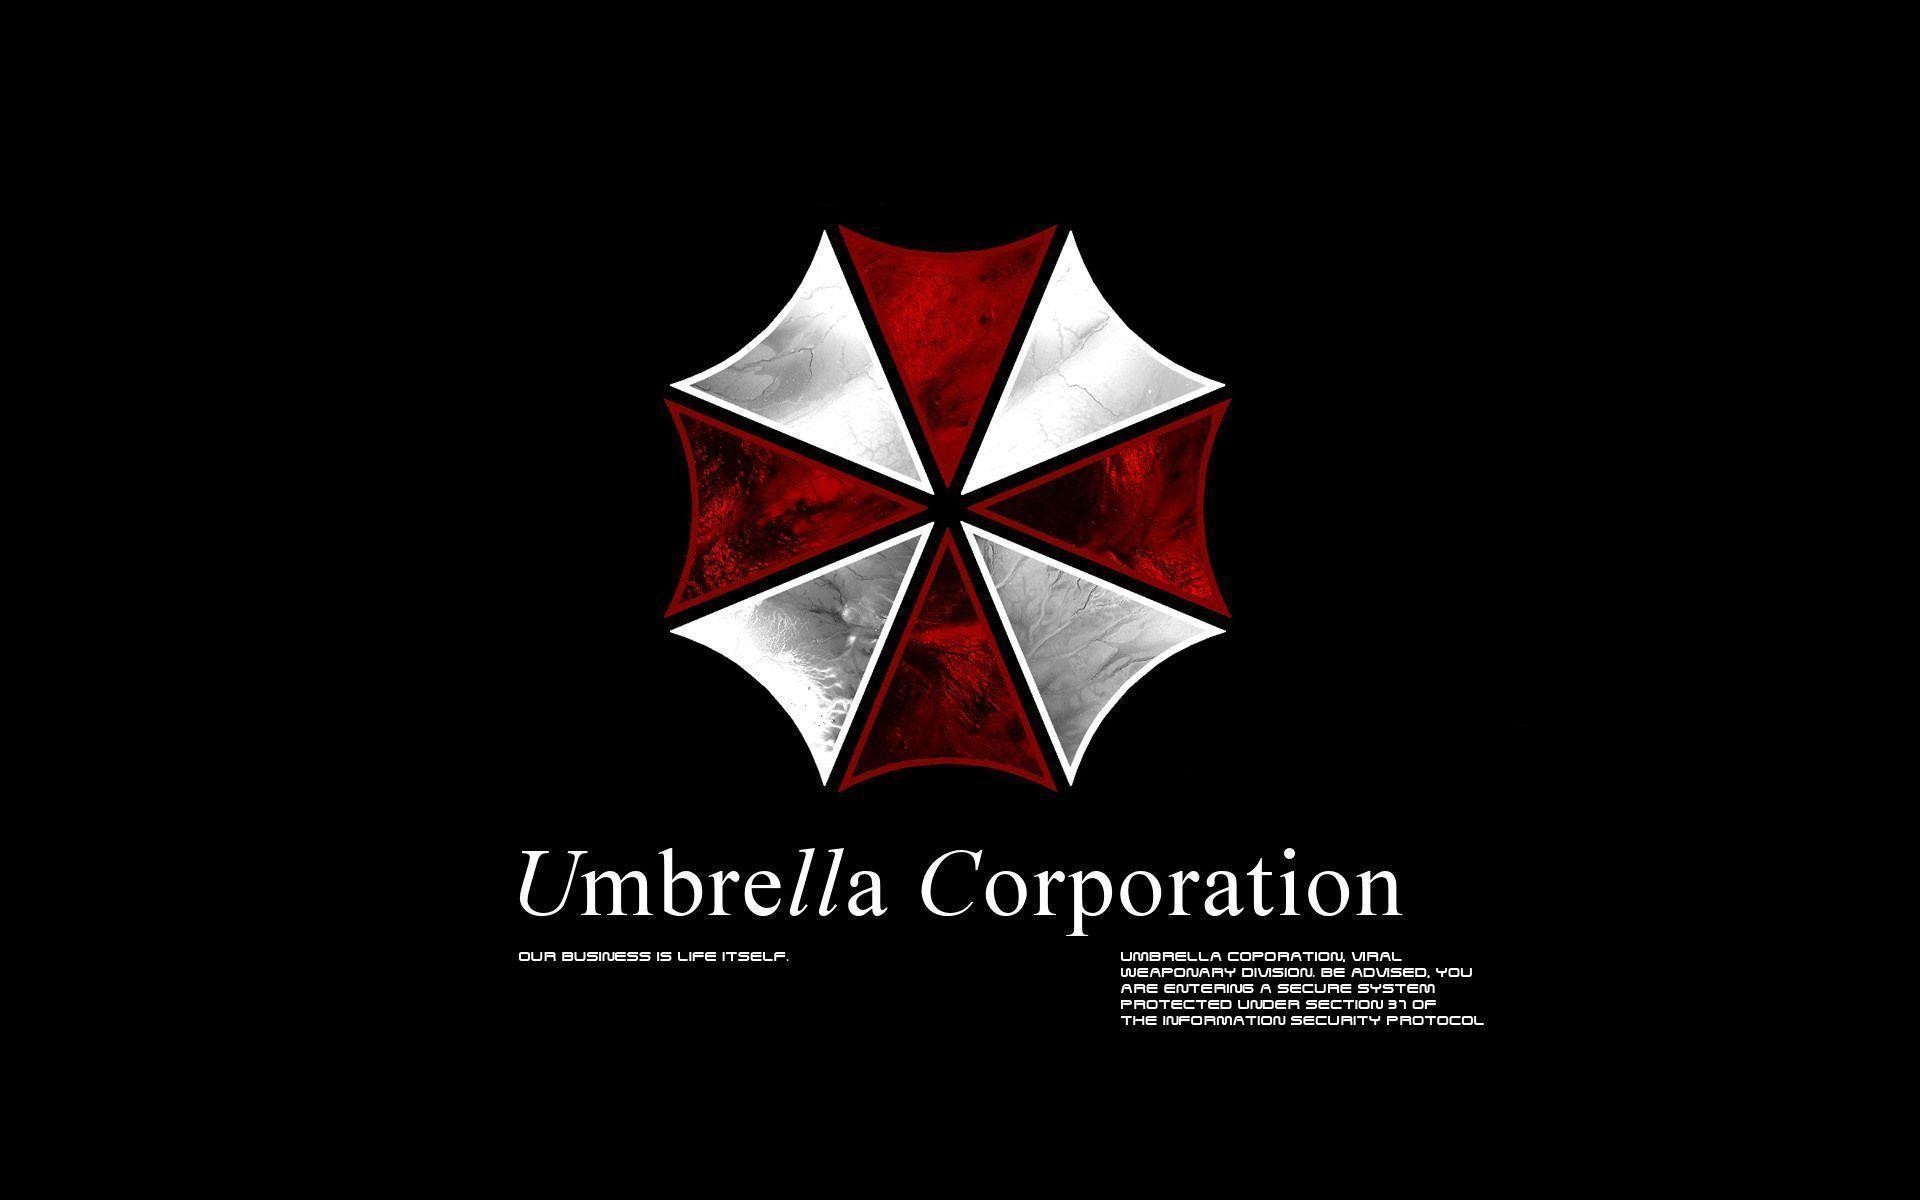 1920x1200 Umbrella Corporation Wallpapers - Full HD wallpaper search